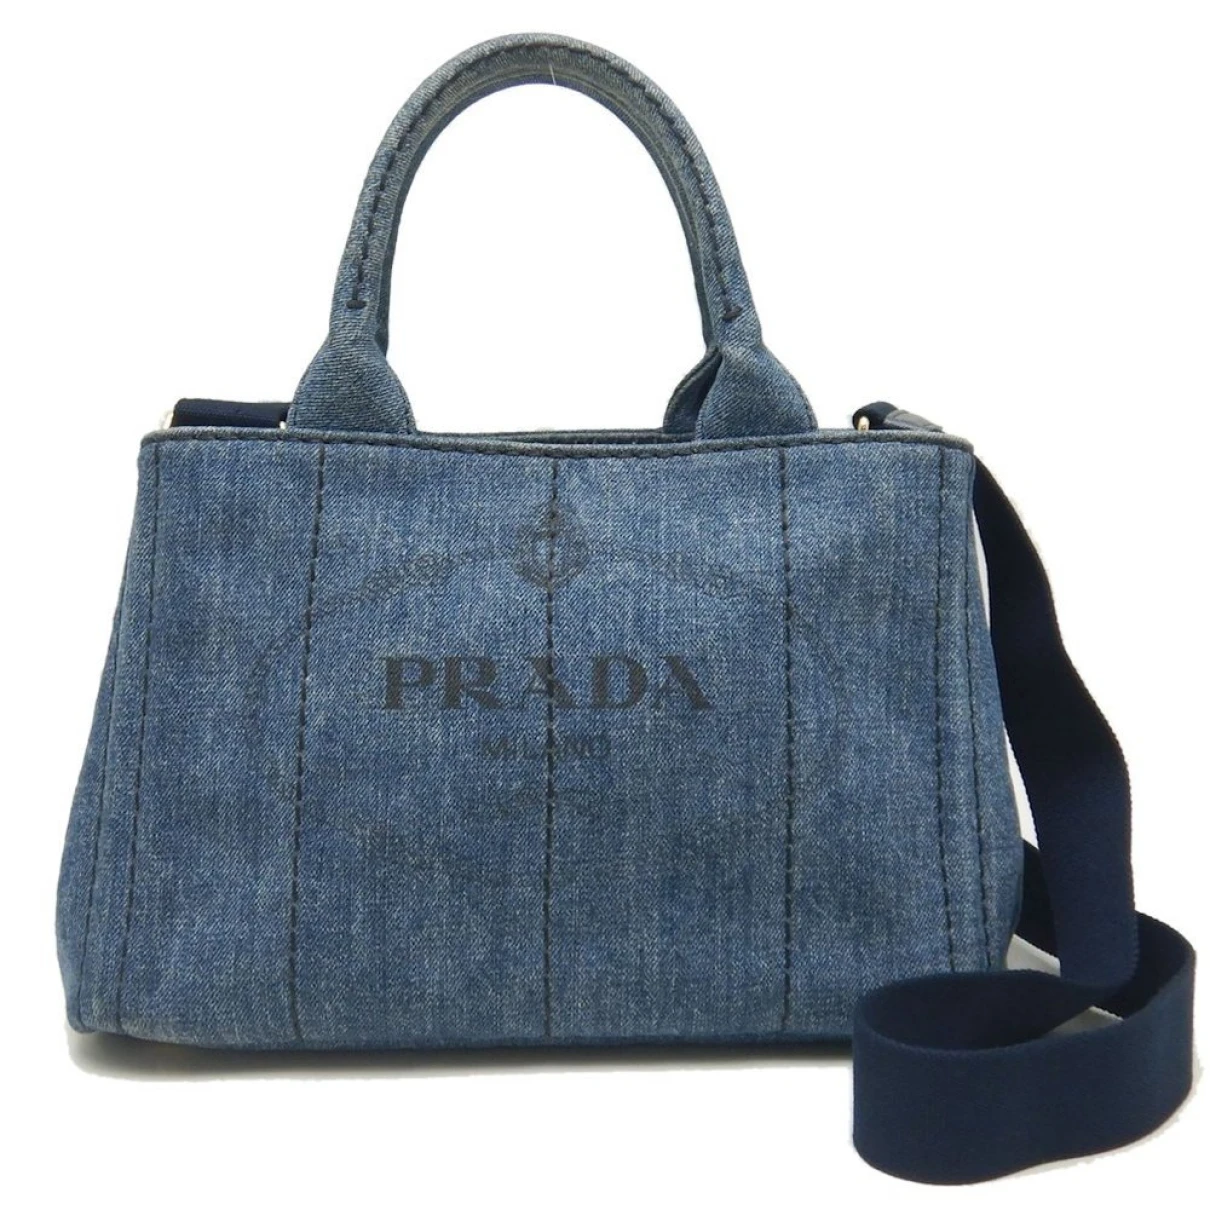 bags Prada handbags for Female Denim - Jeans. Used condition